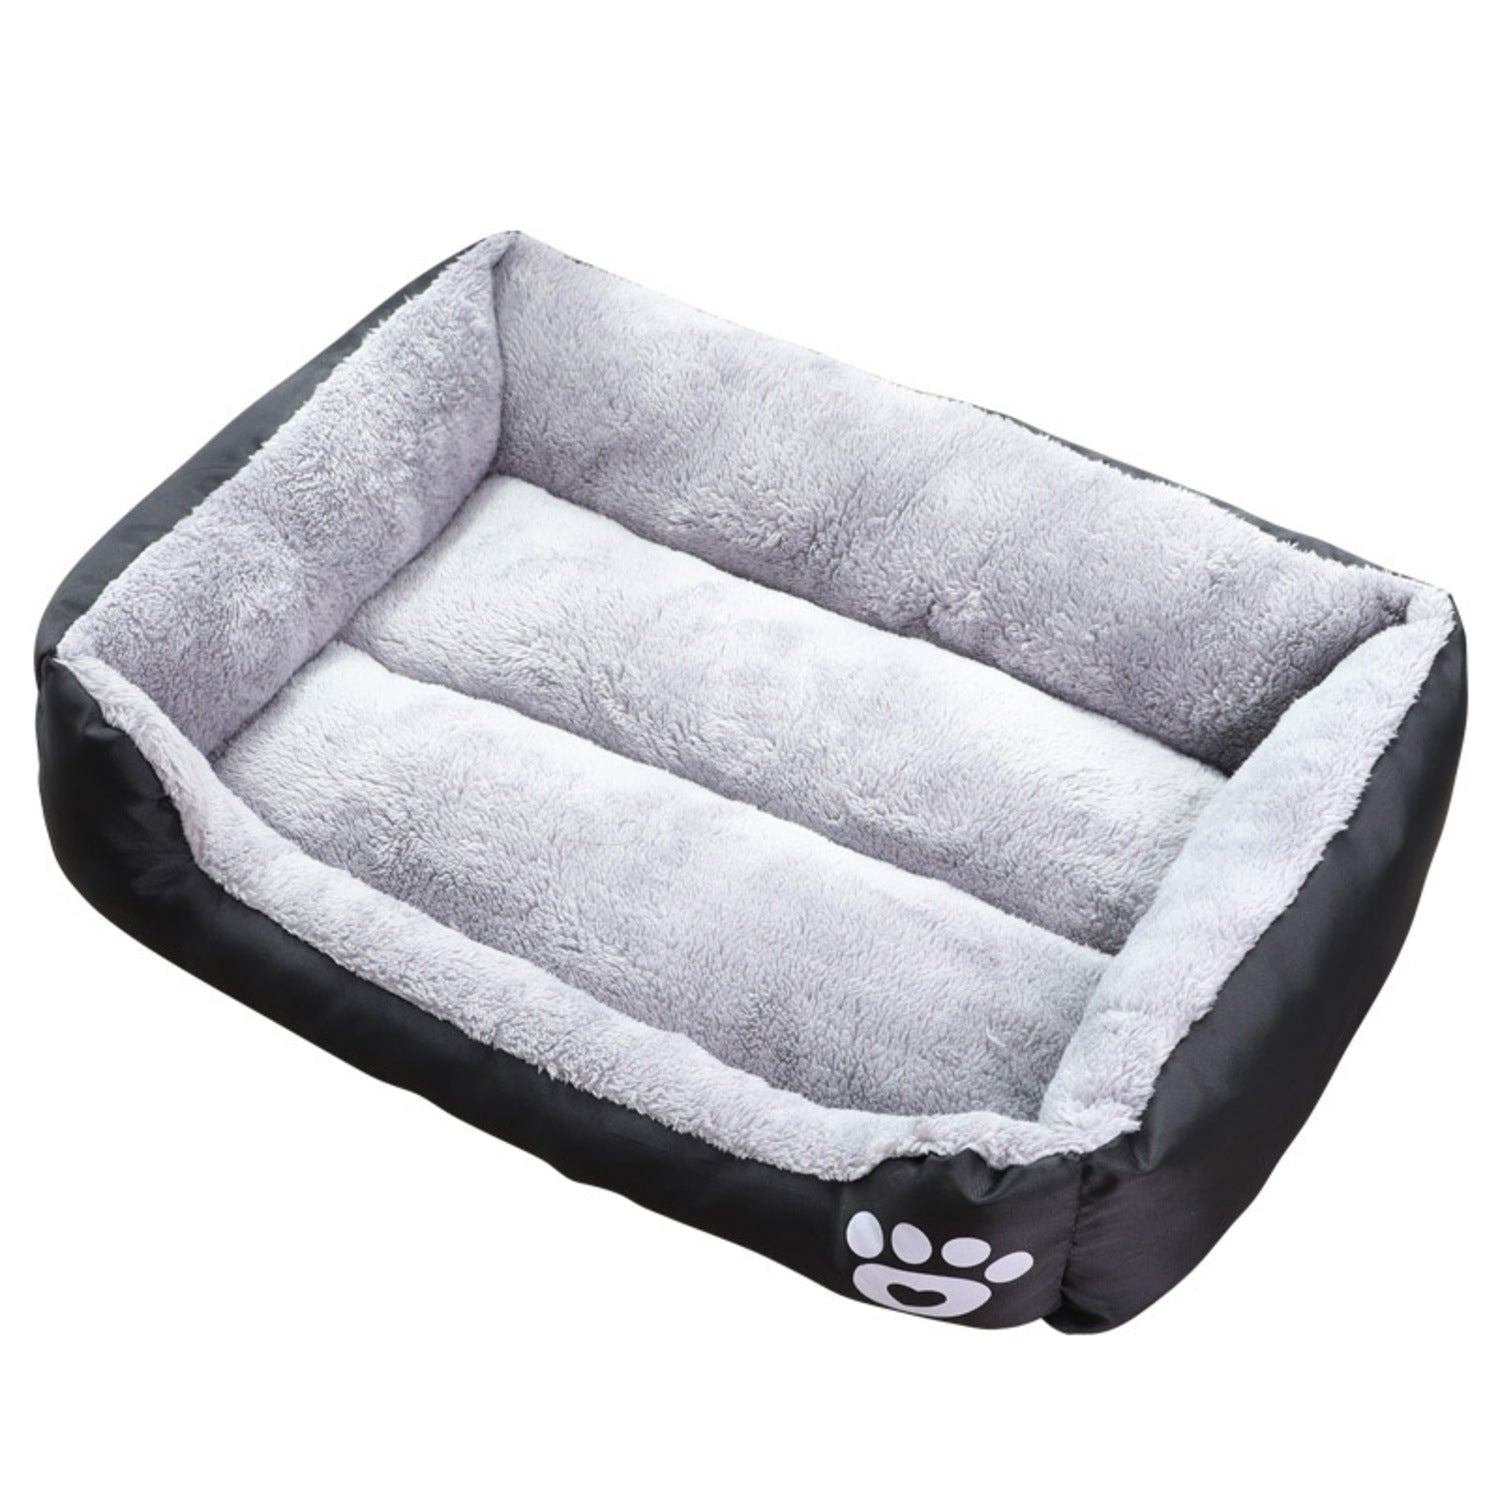 Floofi Pet Bed Square XL Size (Black)